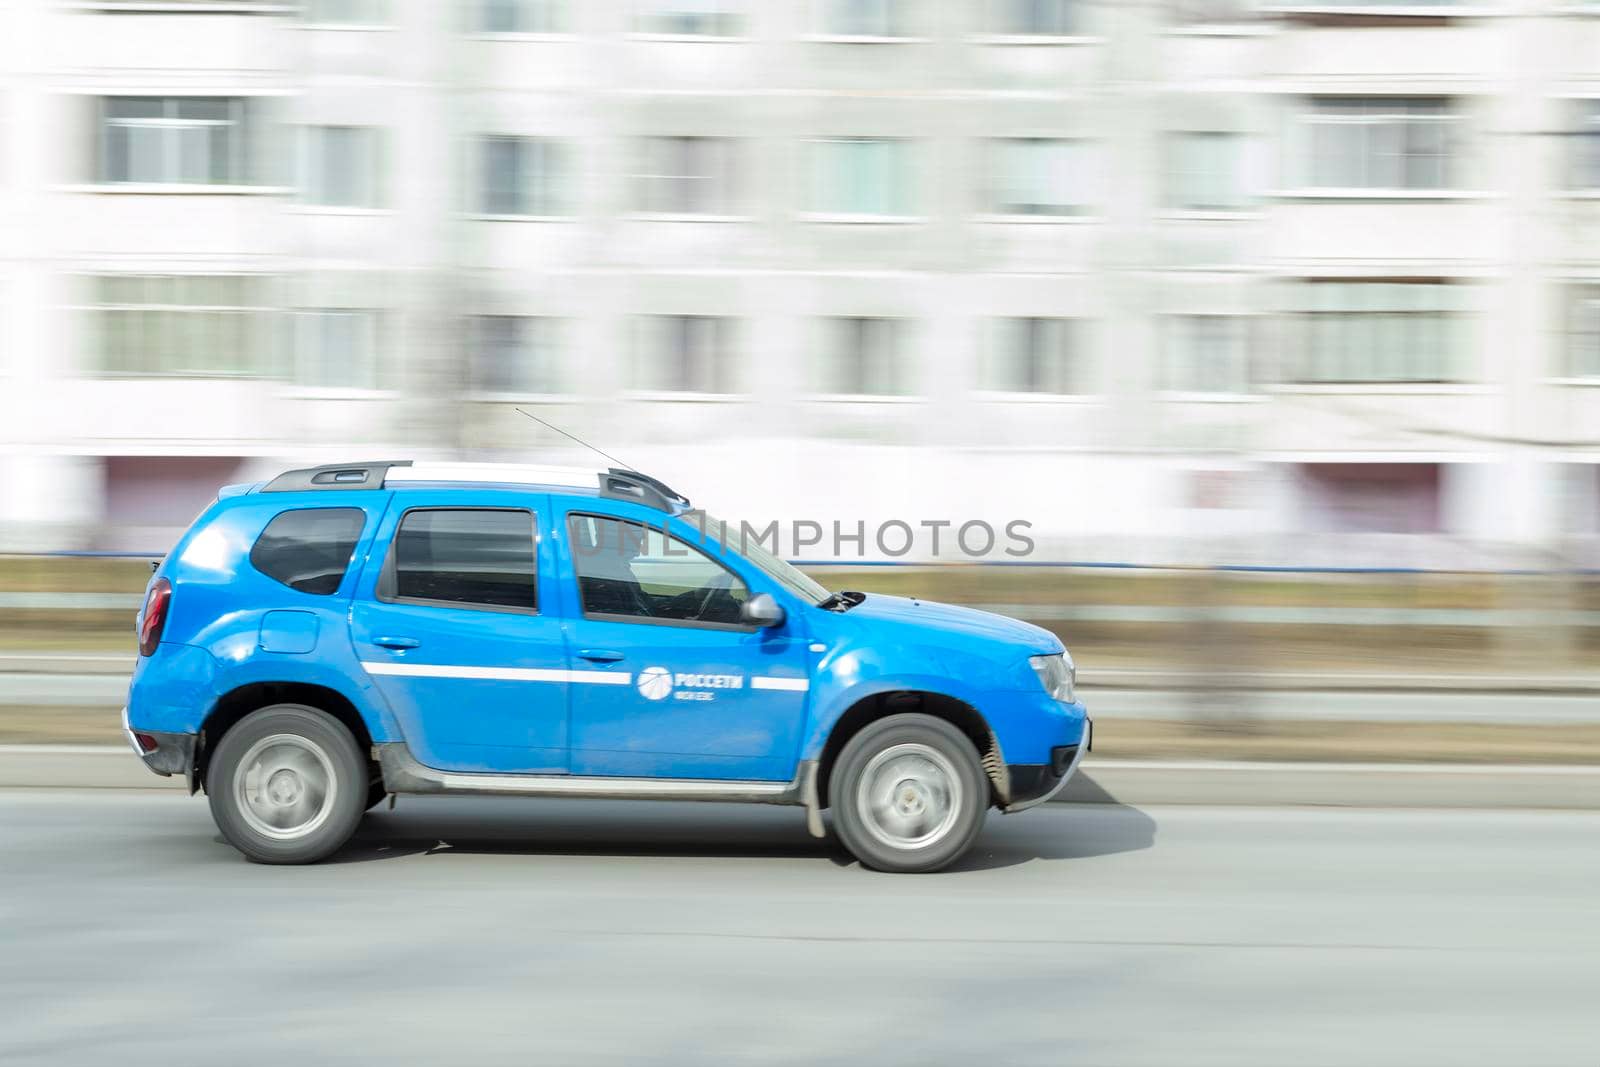 Blue cars in motion. Surgut, Russia - 16 April 2021 by Essffes